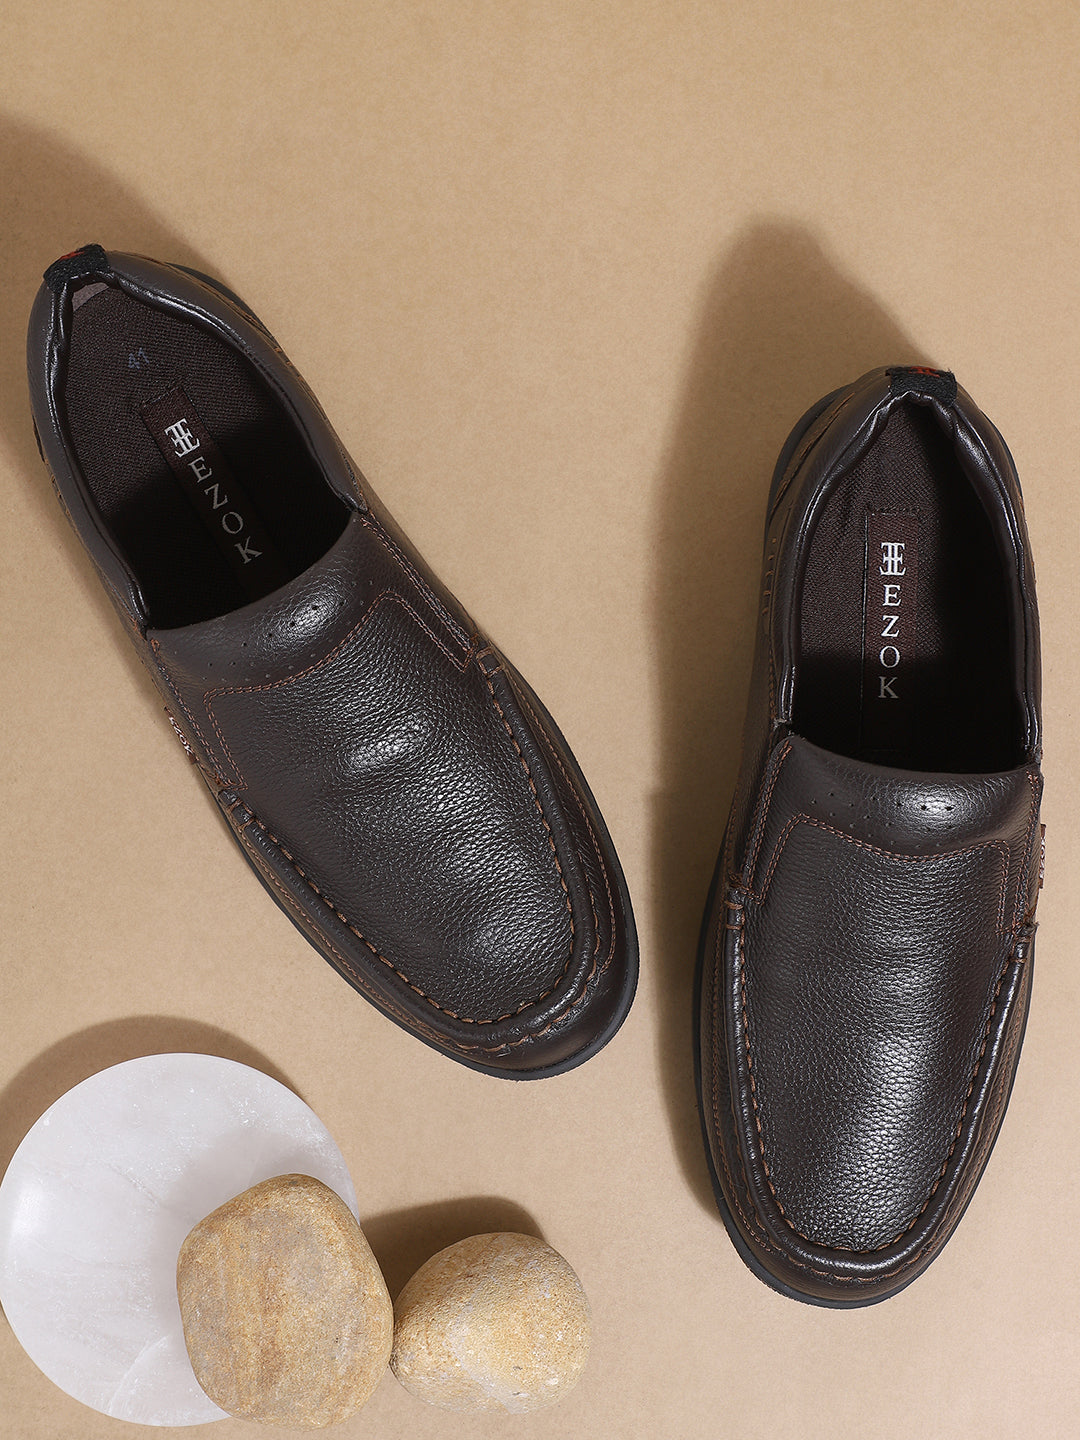 Ezok Men Brown Leather Casual Shoes